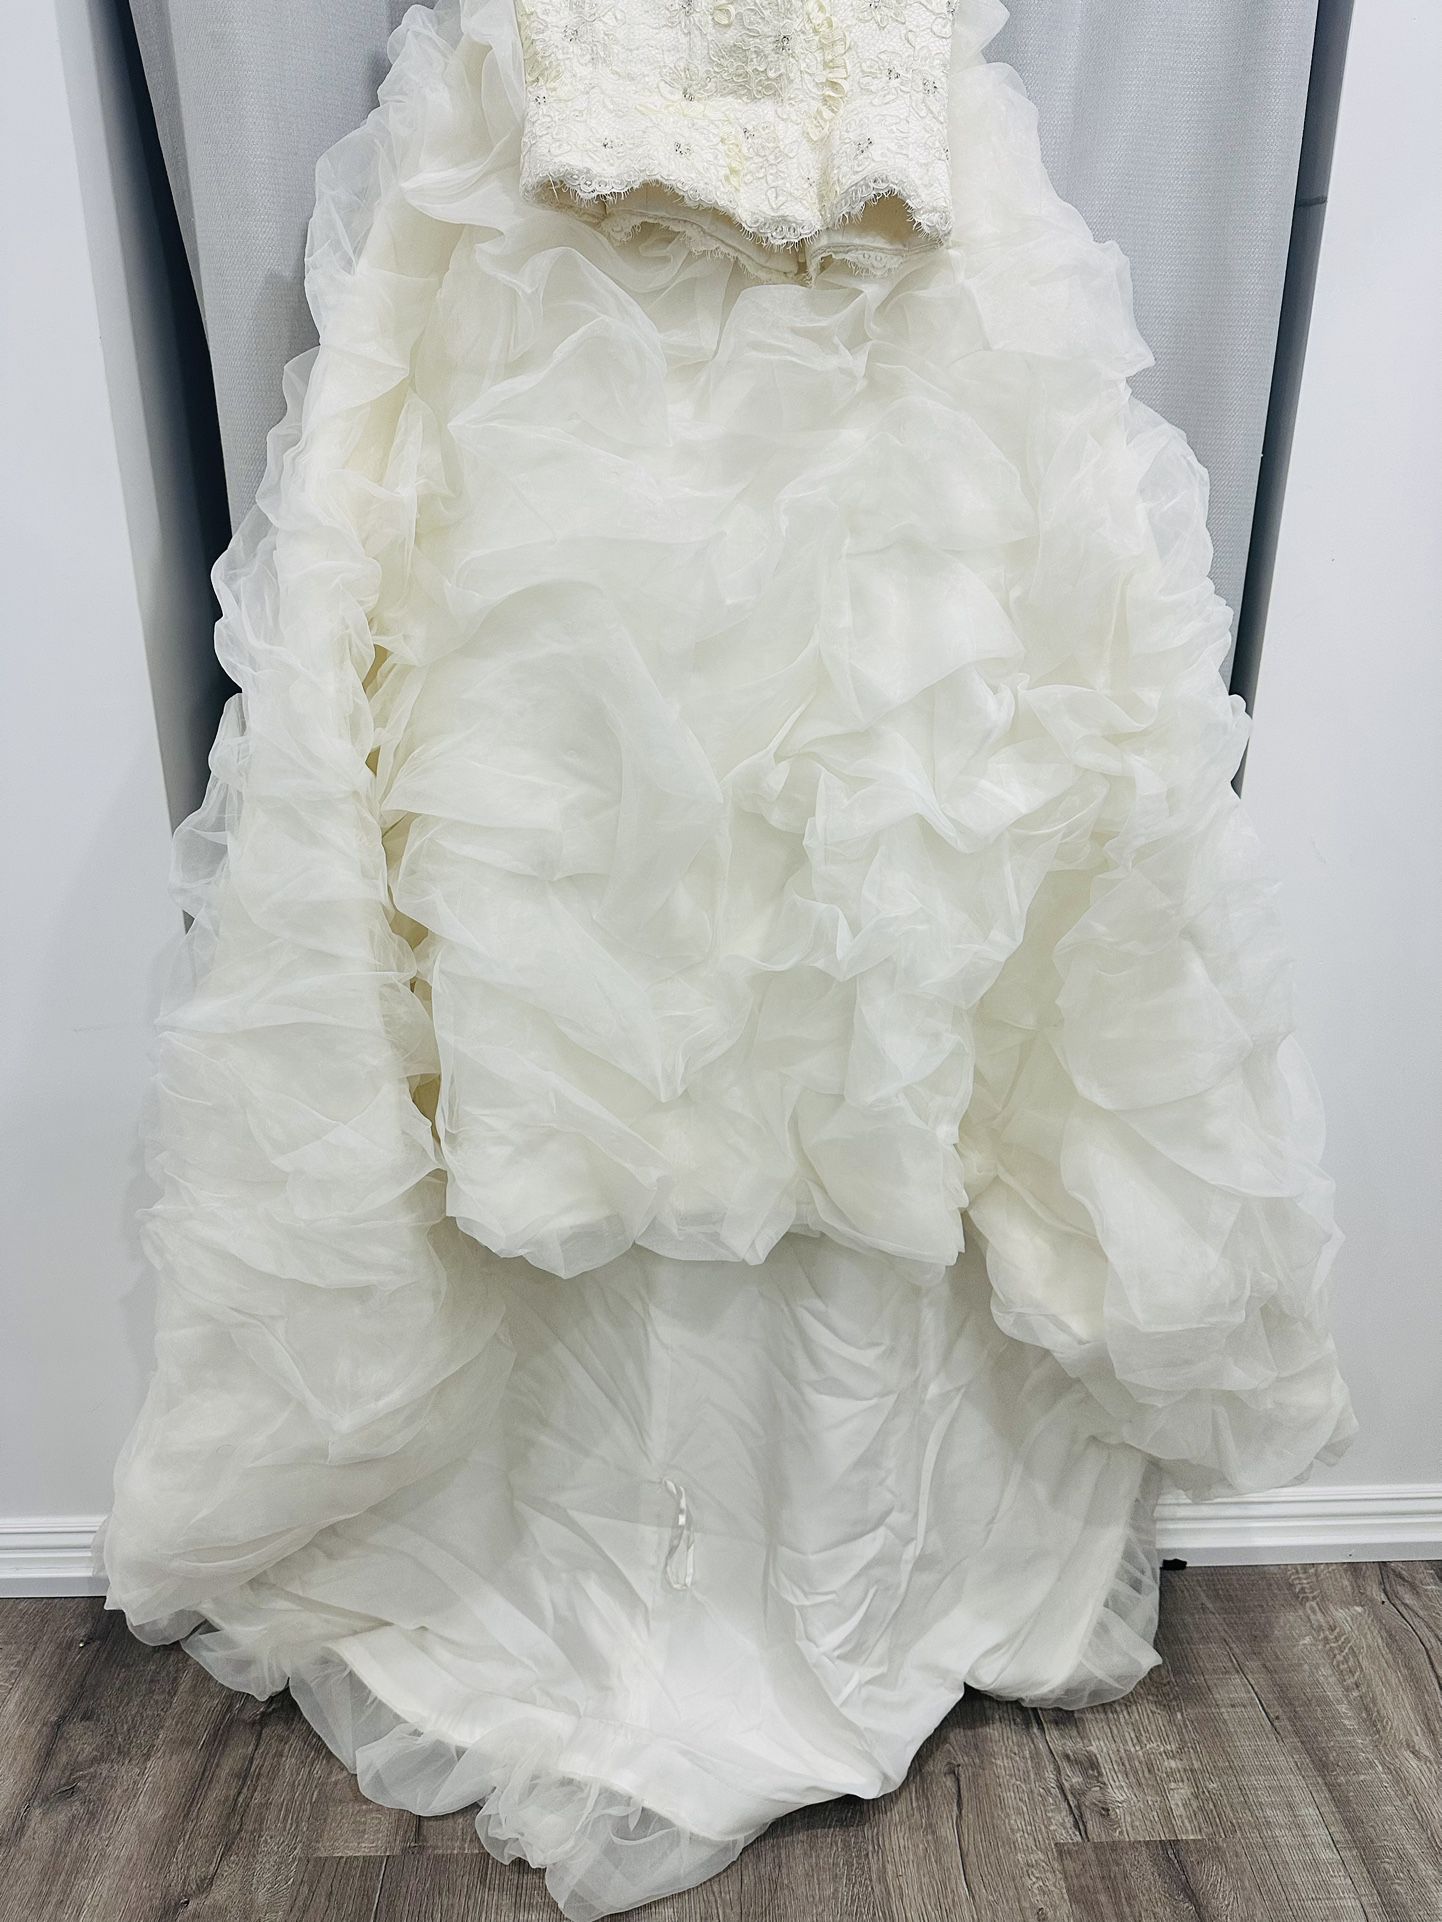 Ivory Wedding Dress Imported From England 